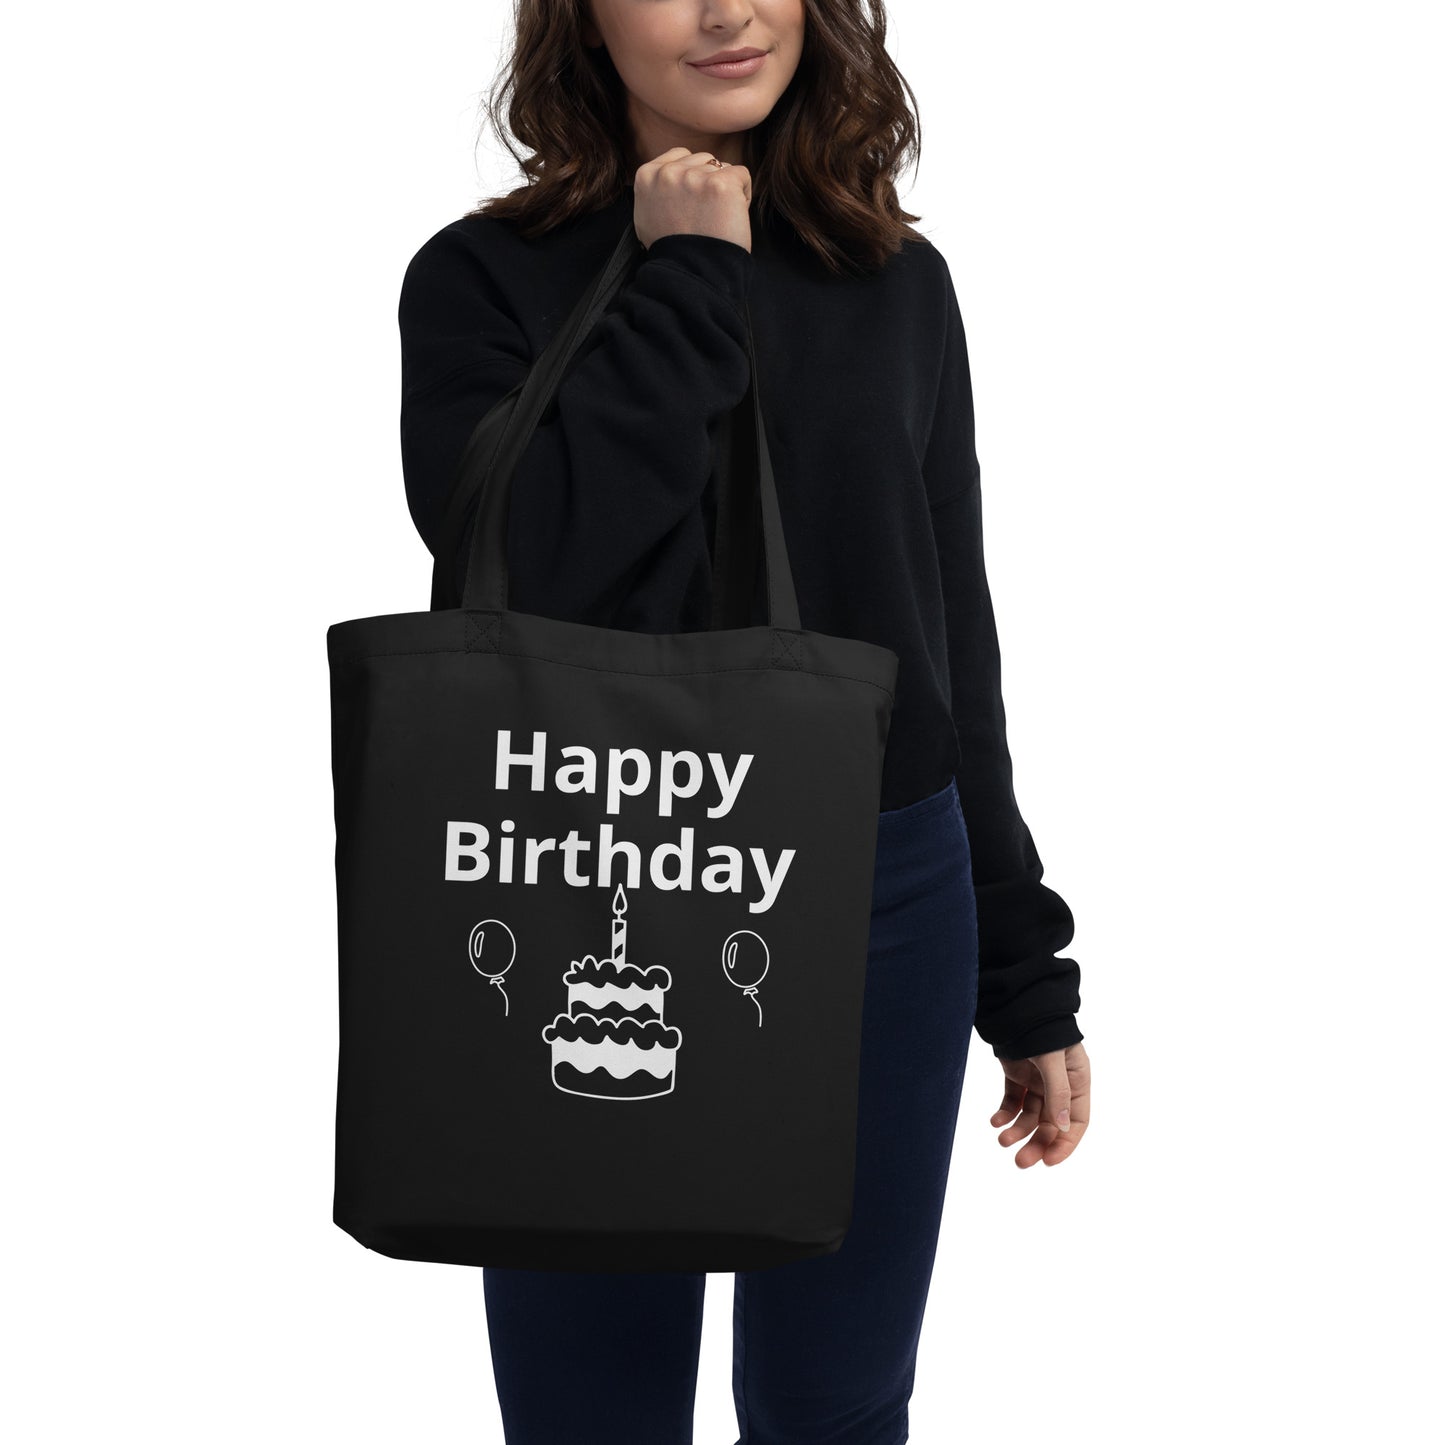 Happy Birthday Eco Tote Bag